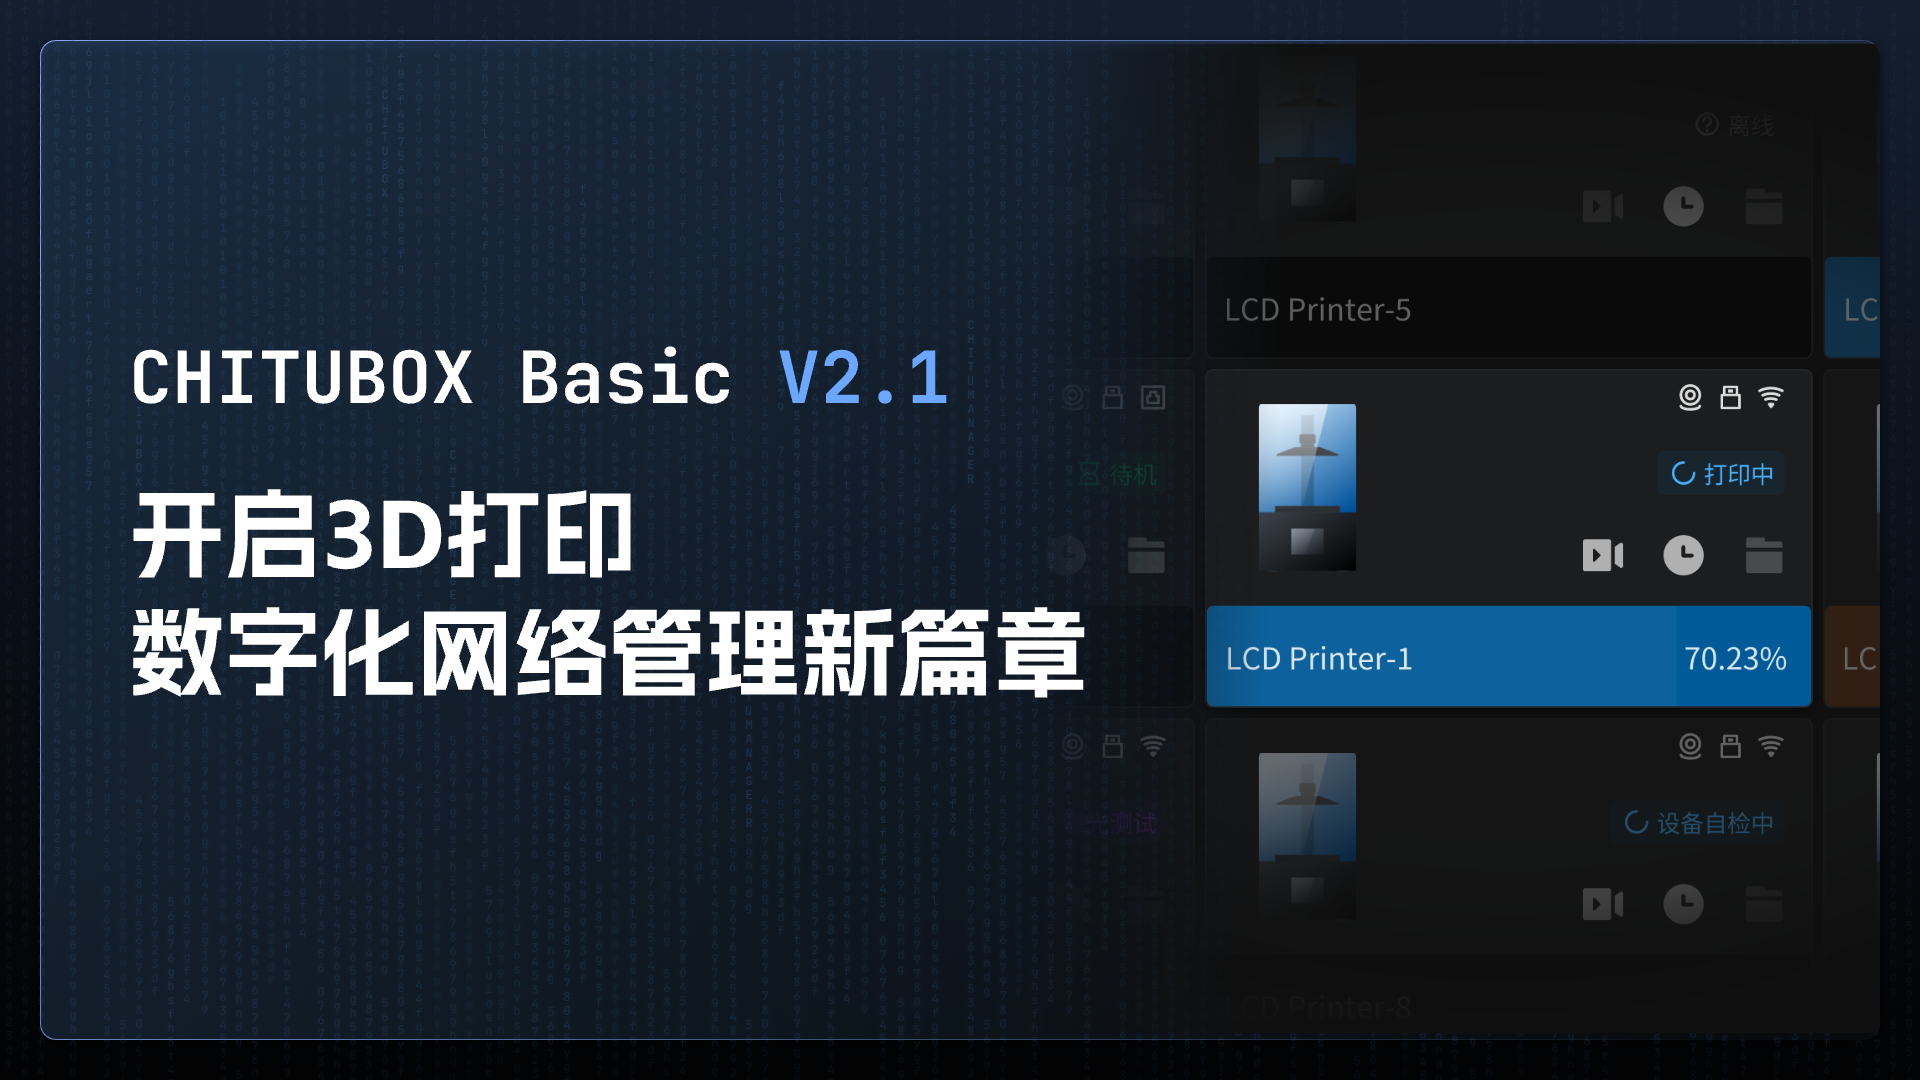 CHITUBOX Basic 2.1封面-中文-1920.png